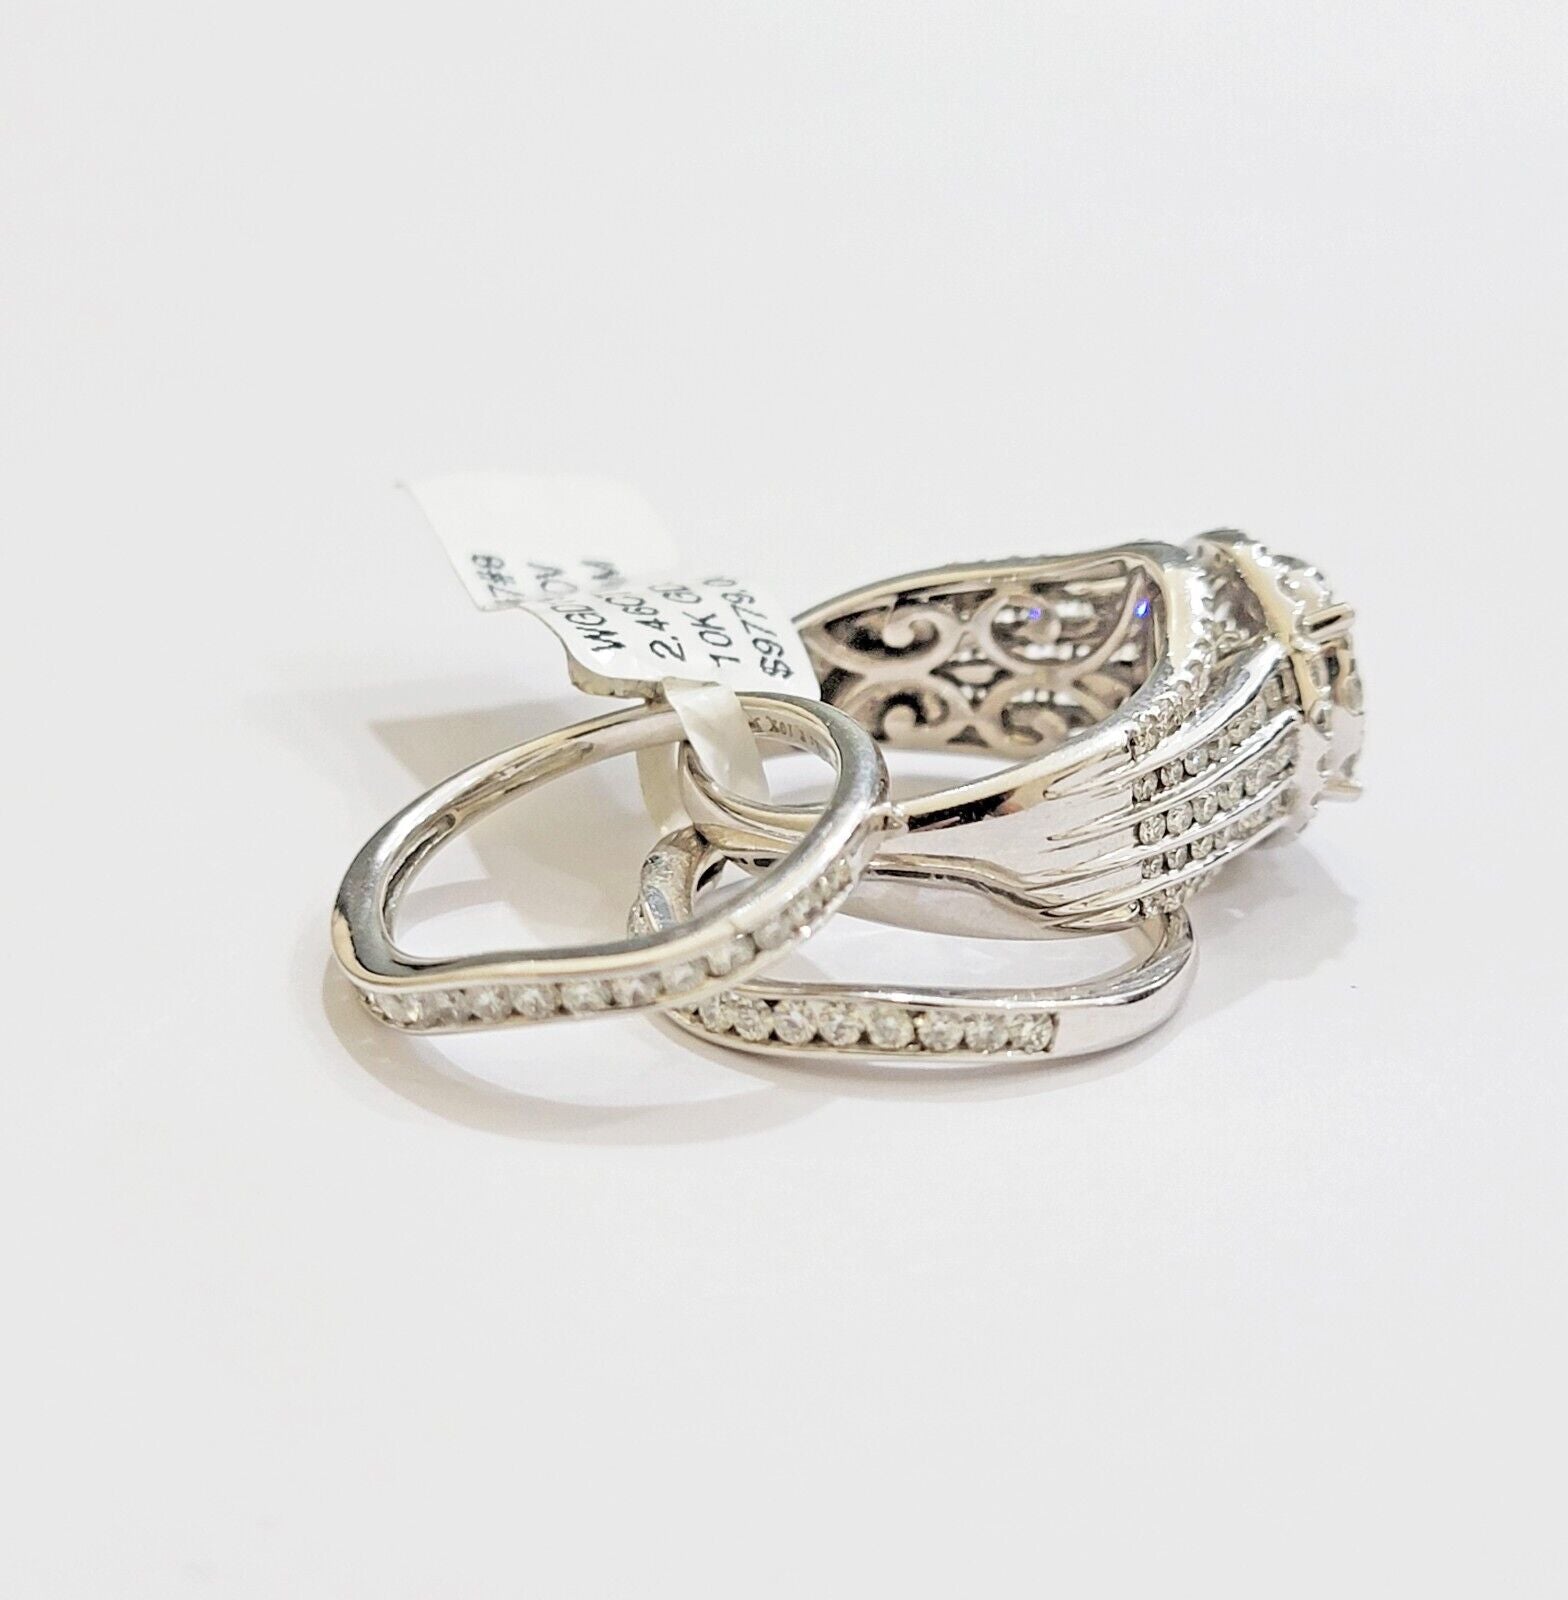 10k White Gold Diamond Ring Band Set Ladies 3CTW Wedding Engagement Solid REAL